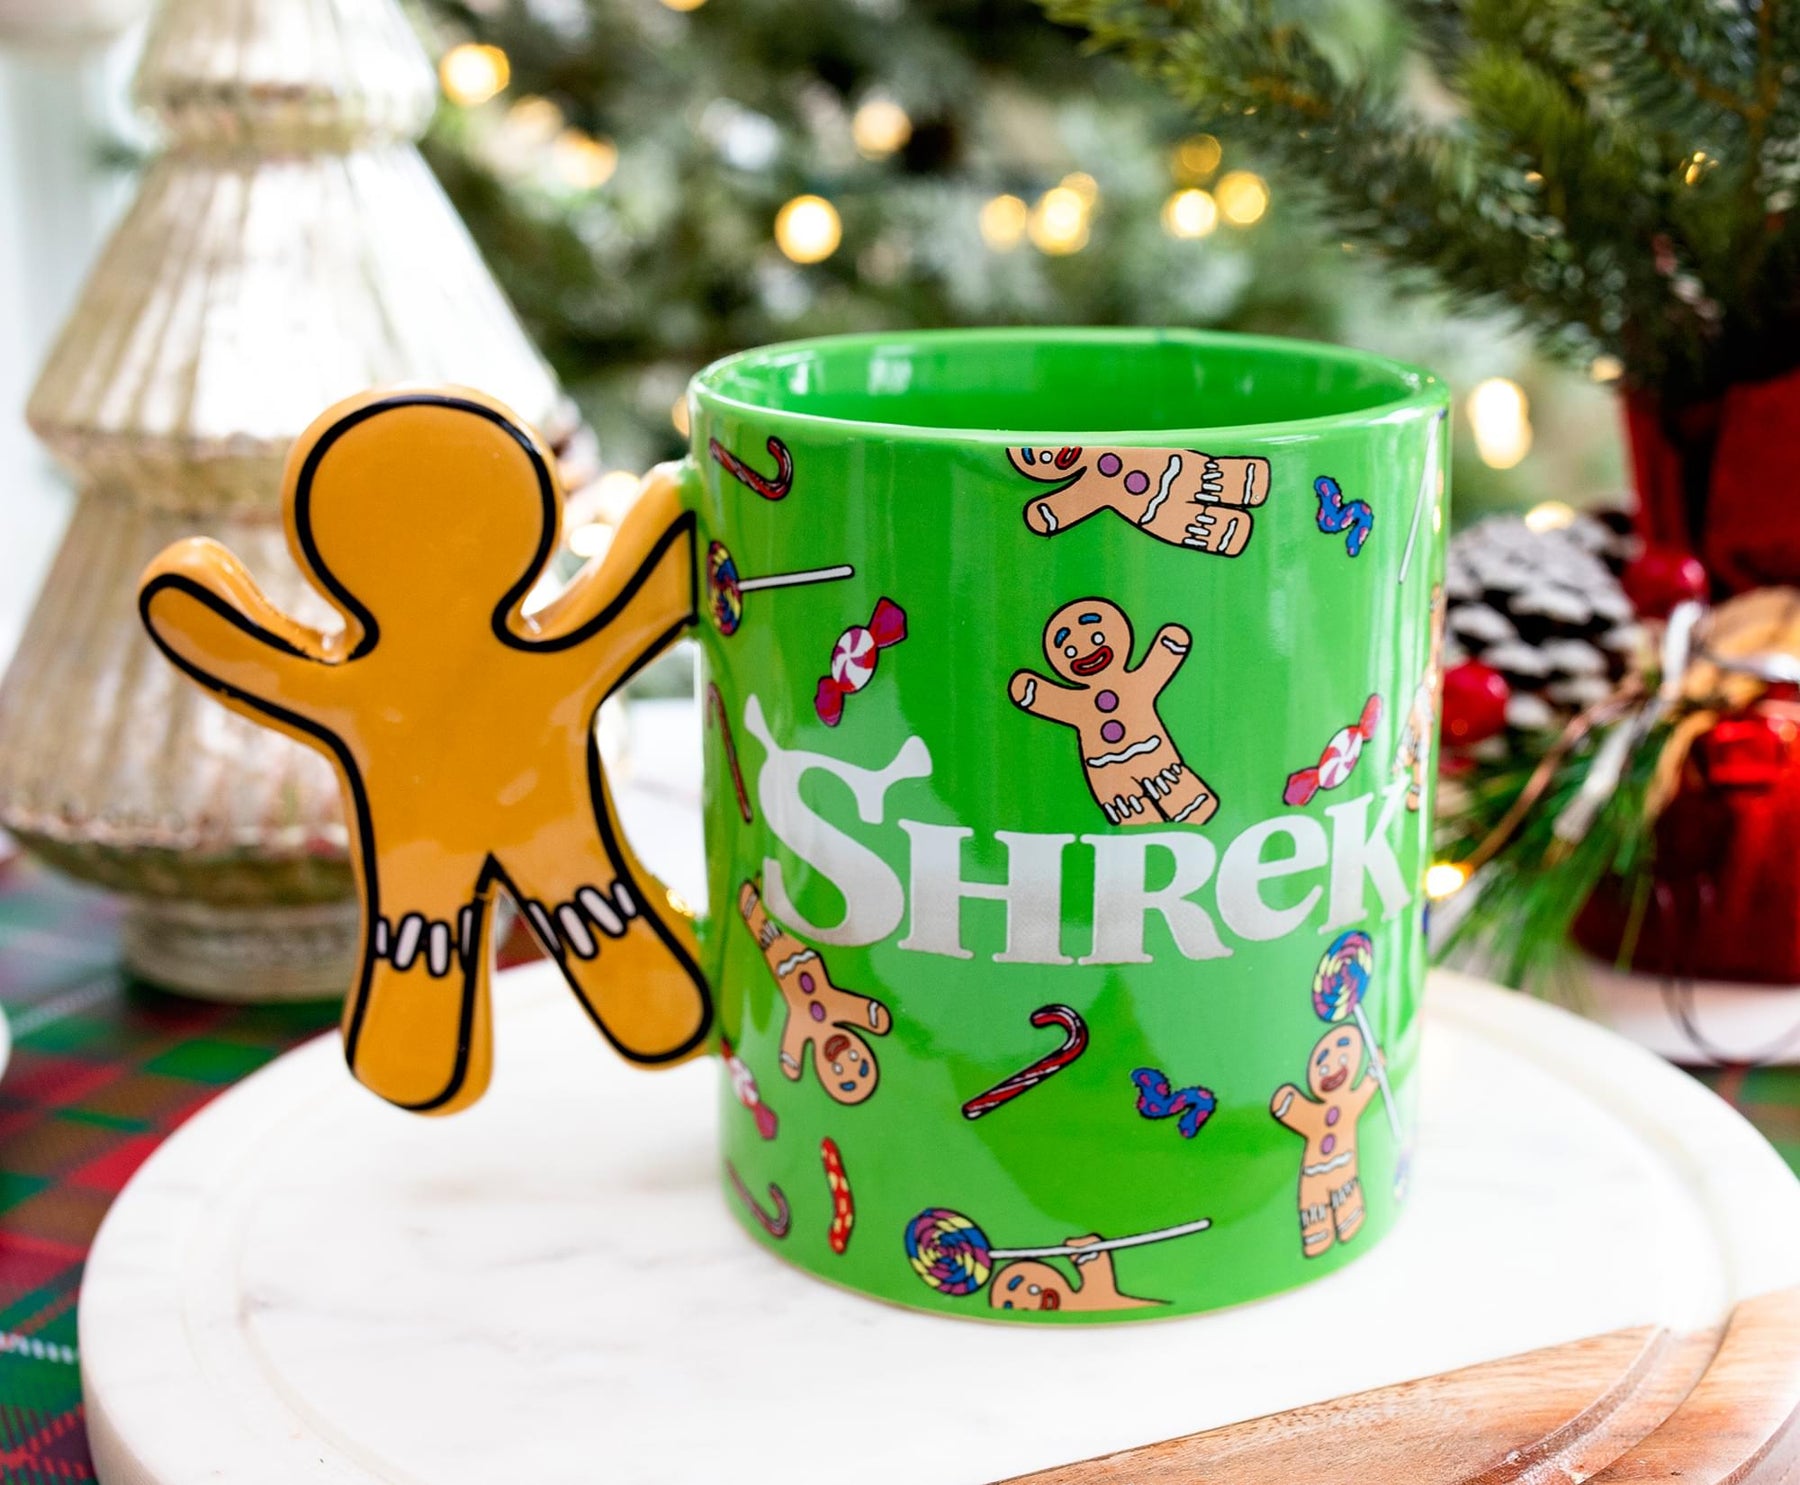 Shrek Gingerbread Man "Avast Ye Cookie" Ceramic Mug With Sculpted Handle